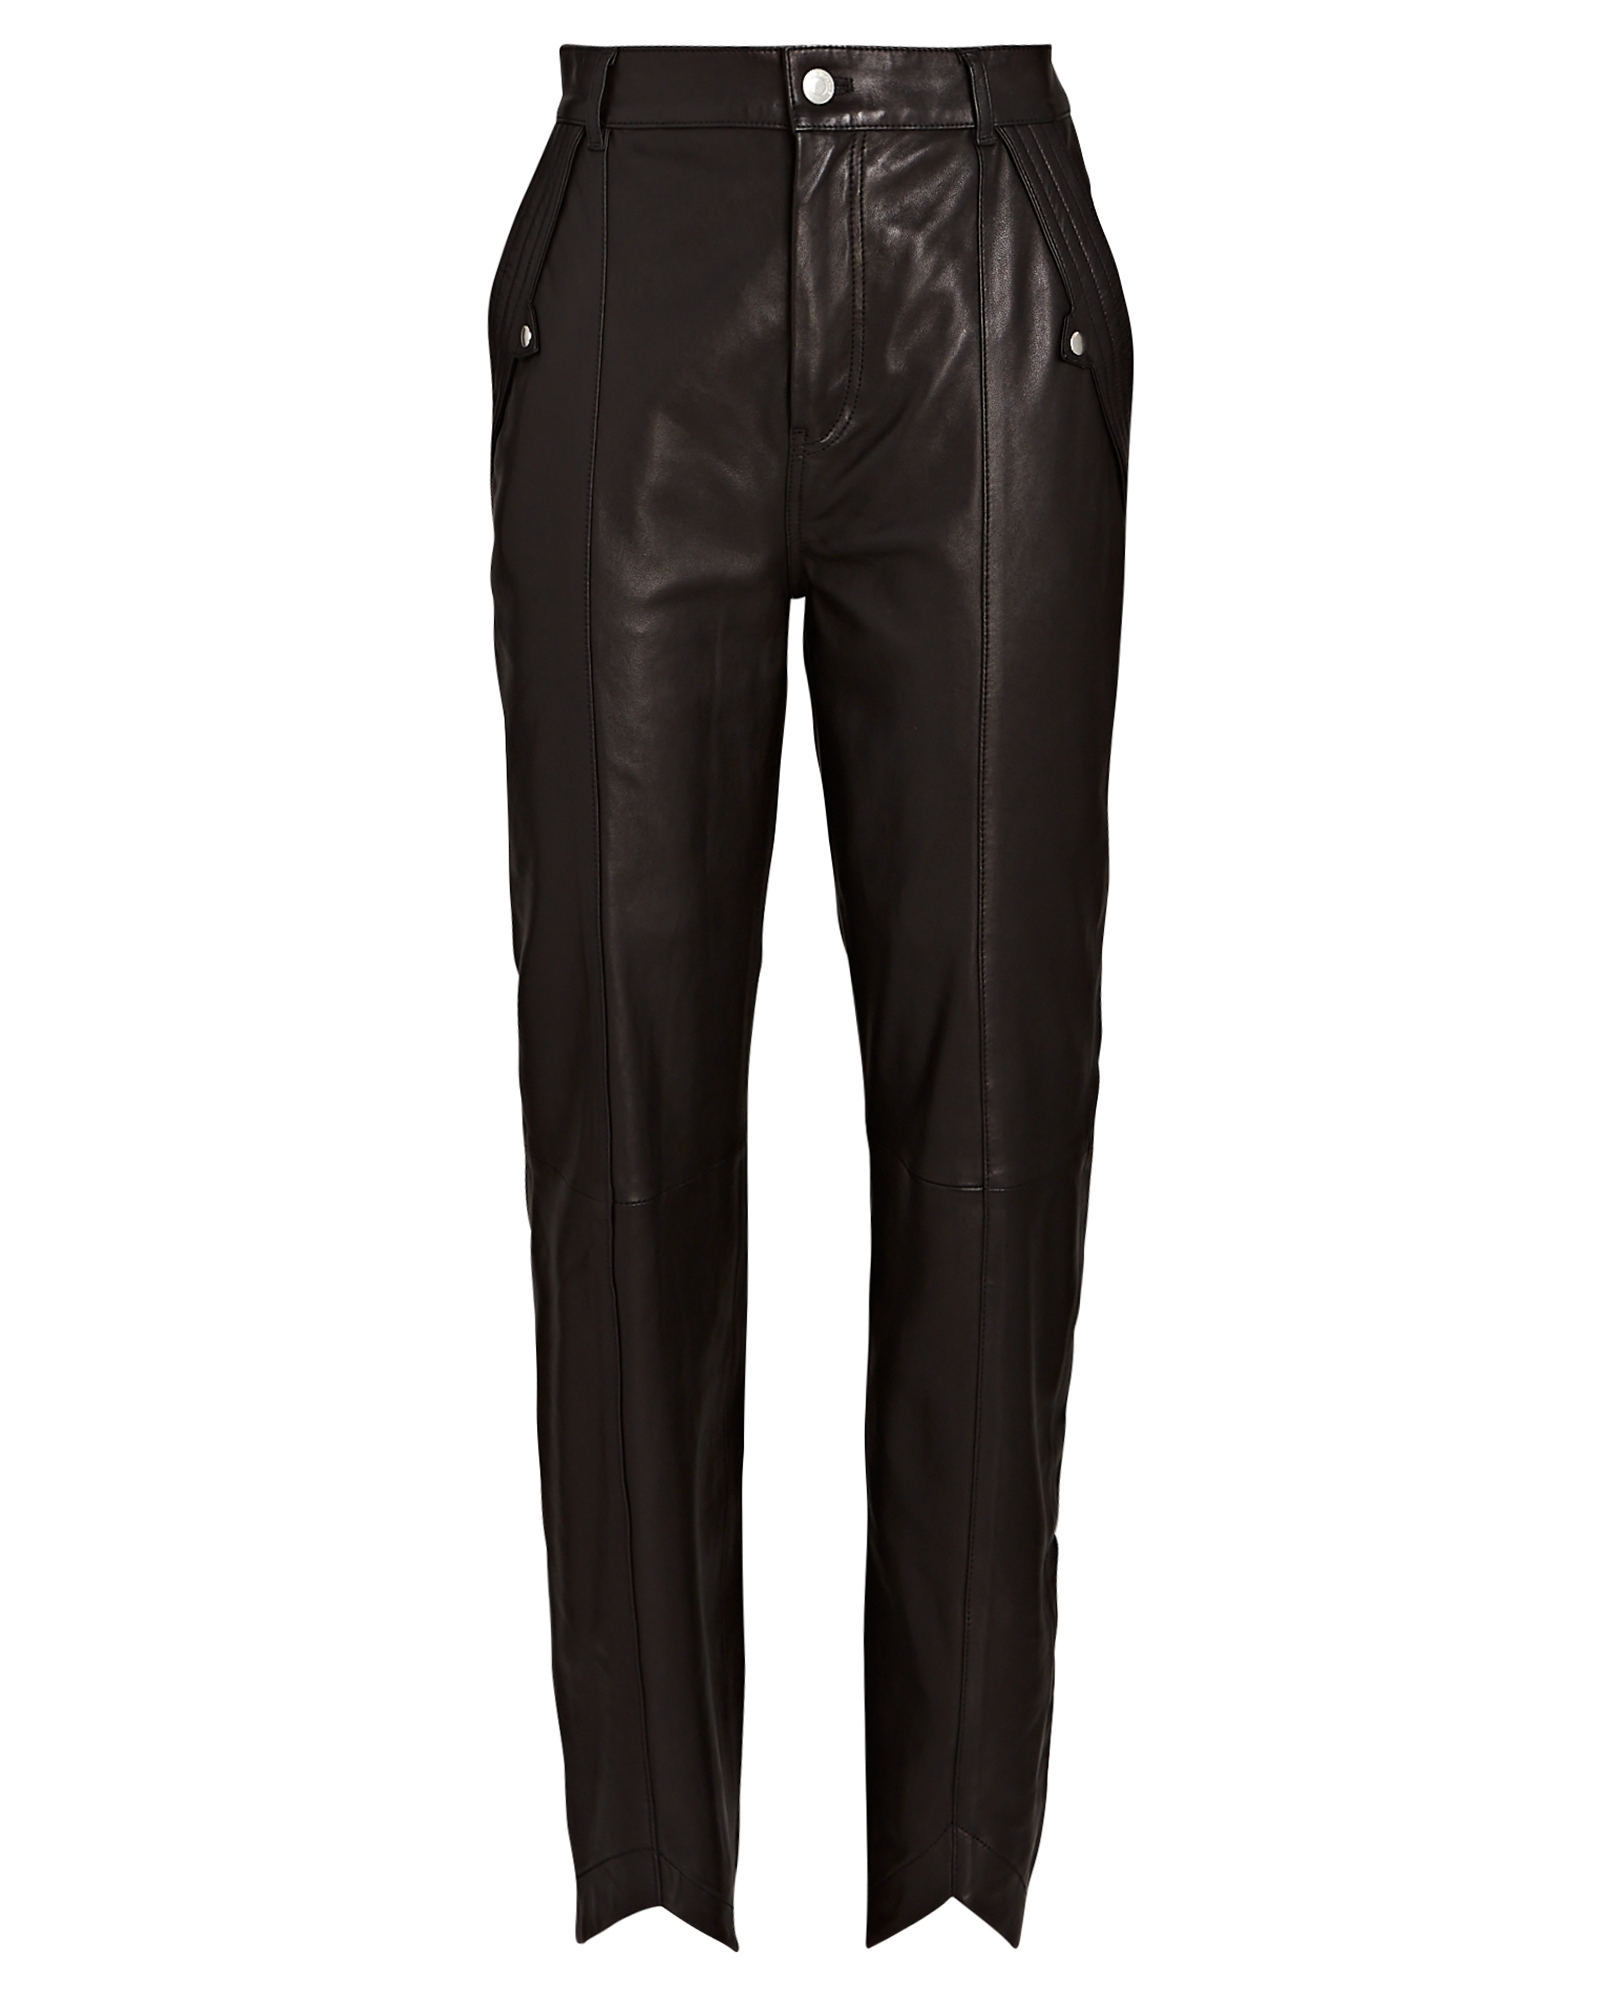 IRO Fotsy Leather Pants in black | INTERMIX®